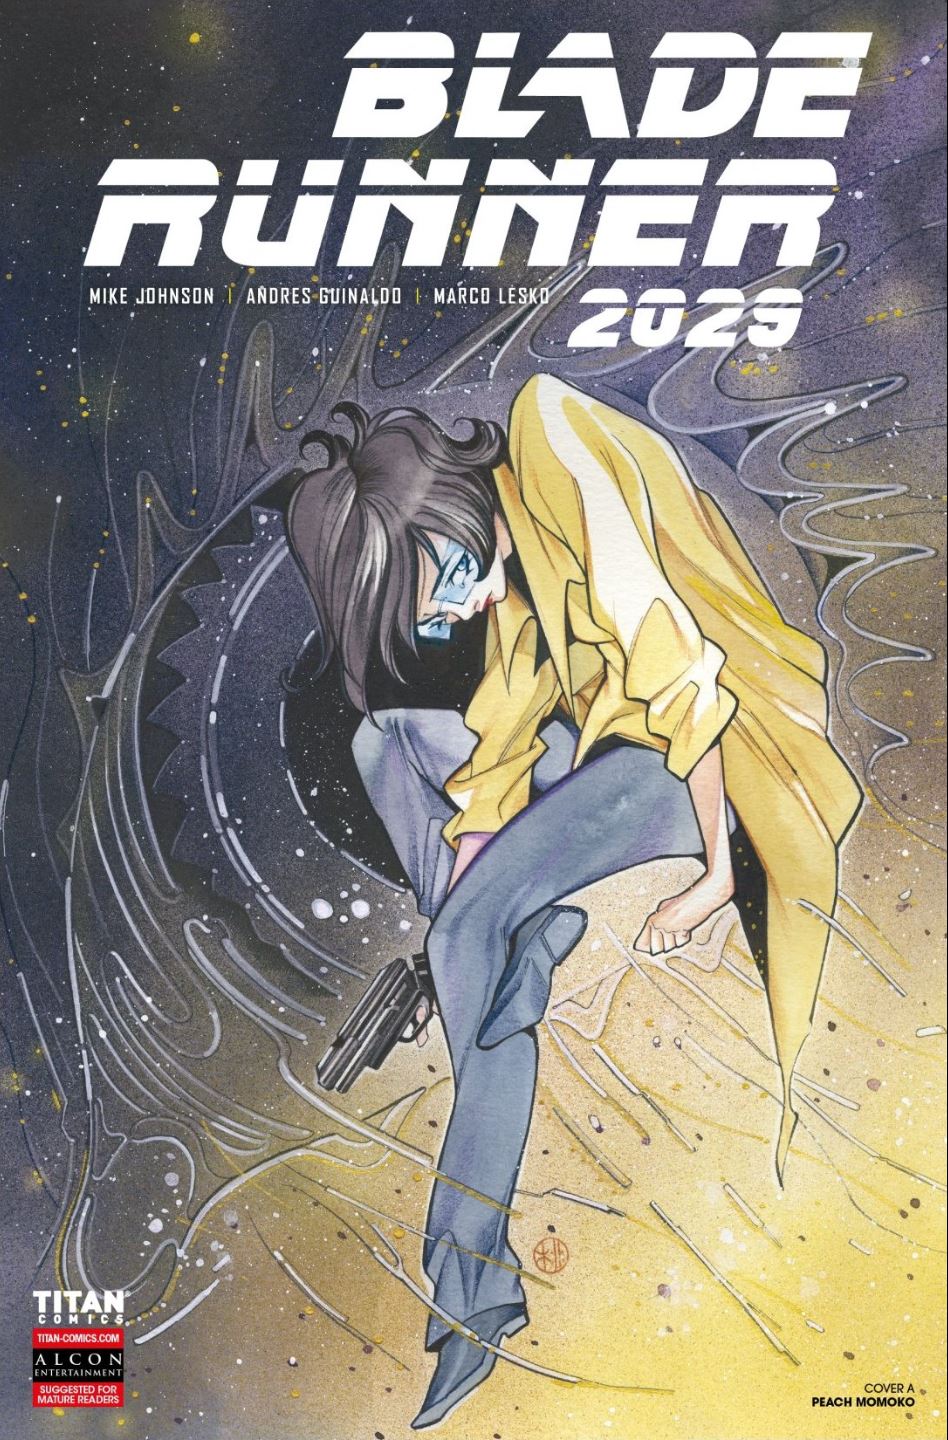 Blade Runner 2029 #4 cover by Peach Momoko